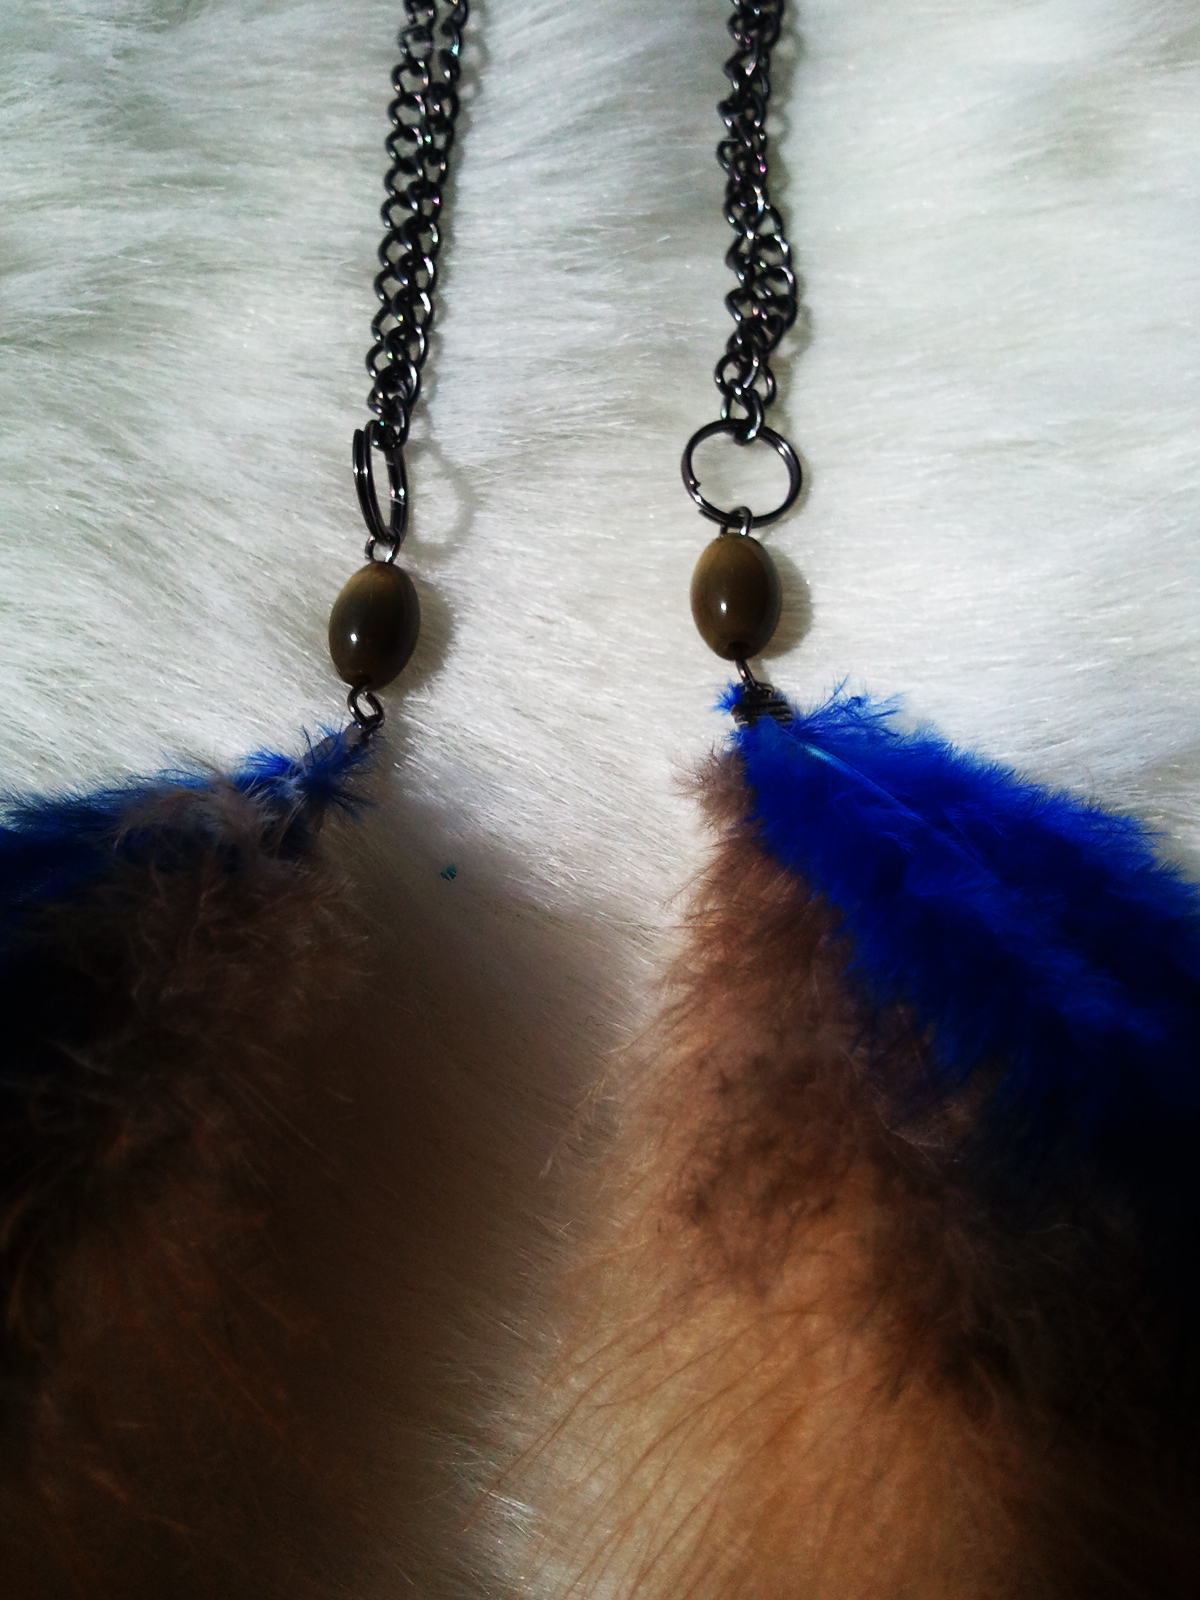 Spiritual Aura Feather Earrings : Stone Bead - Metal Chain - Blue/green Feathers